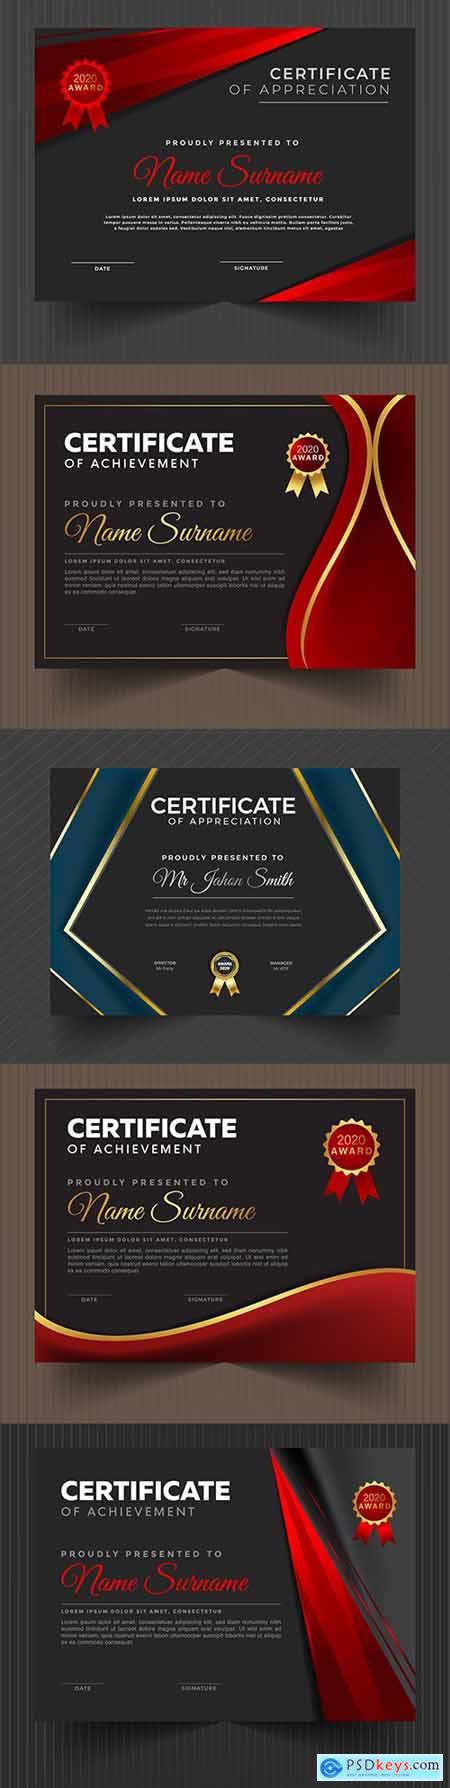 Certificate achievement template design collection 3